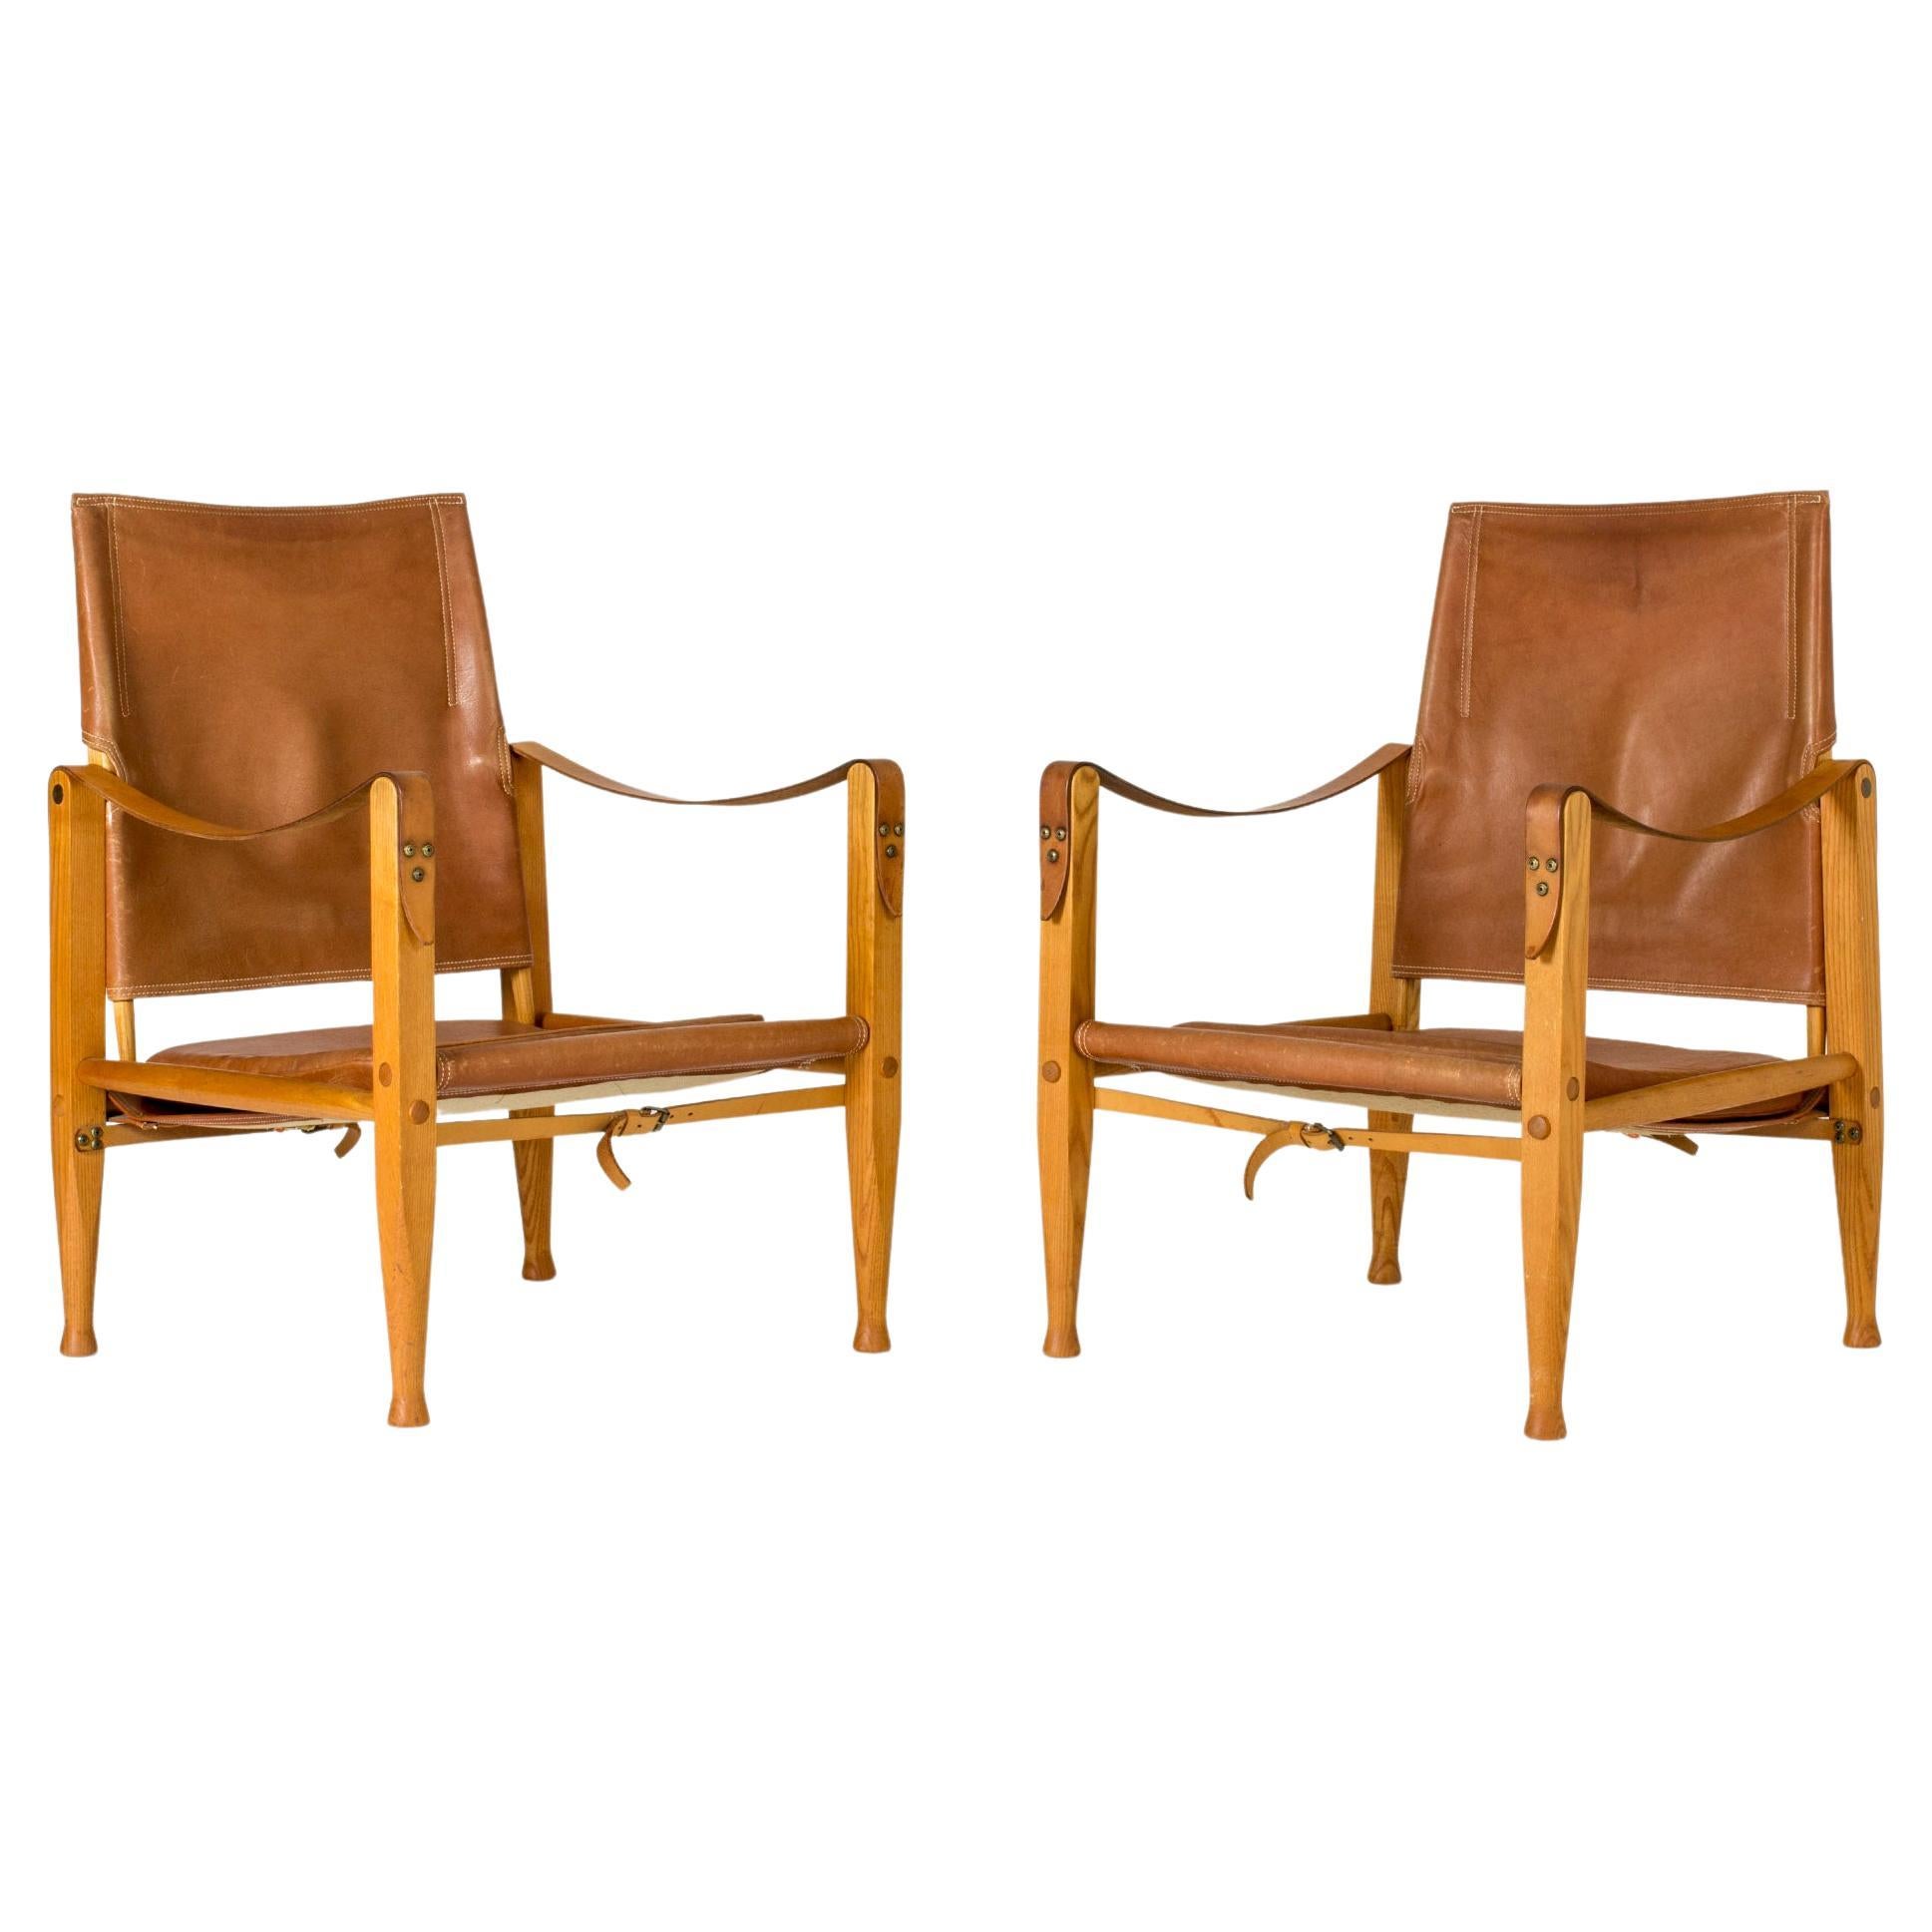 Vintage Scandinavian "Safari" Lounge Chairs by Kaare Klint, Denmark, 1960s For Sale